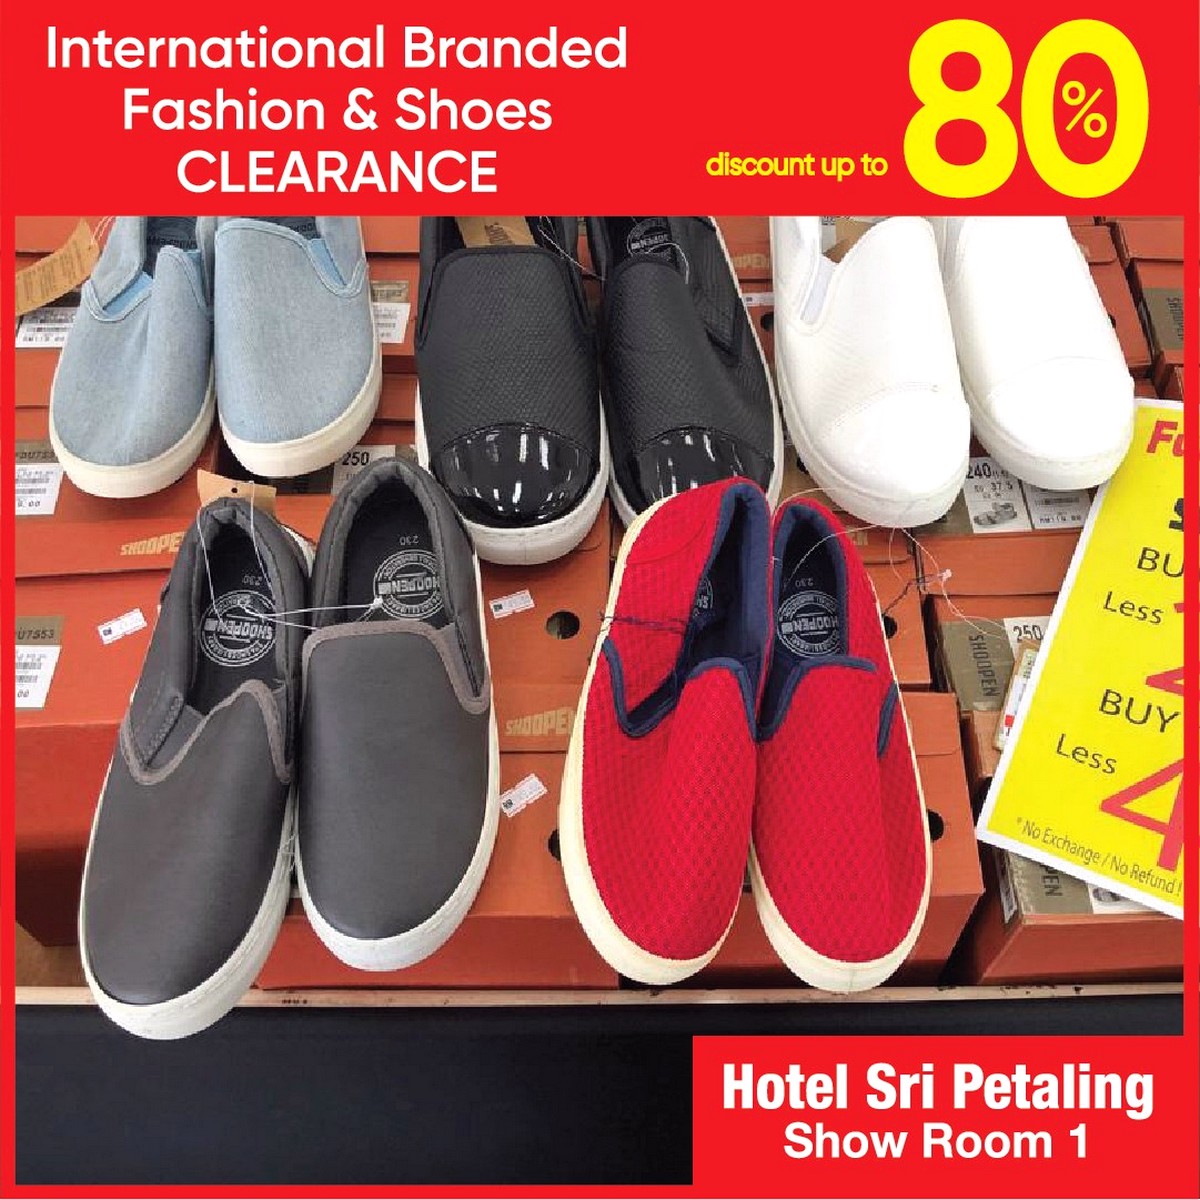 Hotel-Sri-Petaling-Warehouse-Sale-2021-1 - Apparels Fashion Accessories Fashion Lifestyle & Department Store Kuala Lumpur Selangor Warehouse Sale & Clearance in Malaysia 